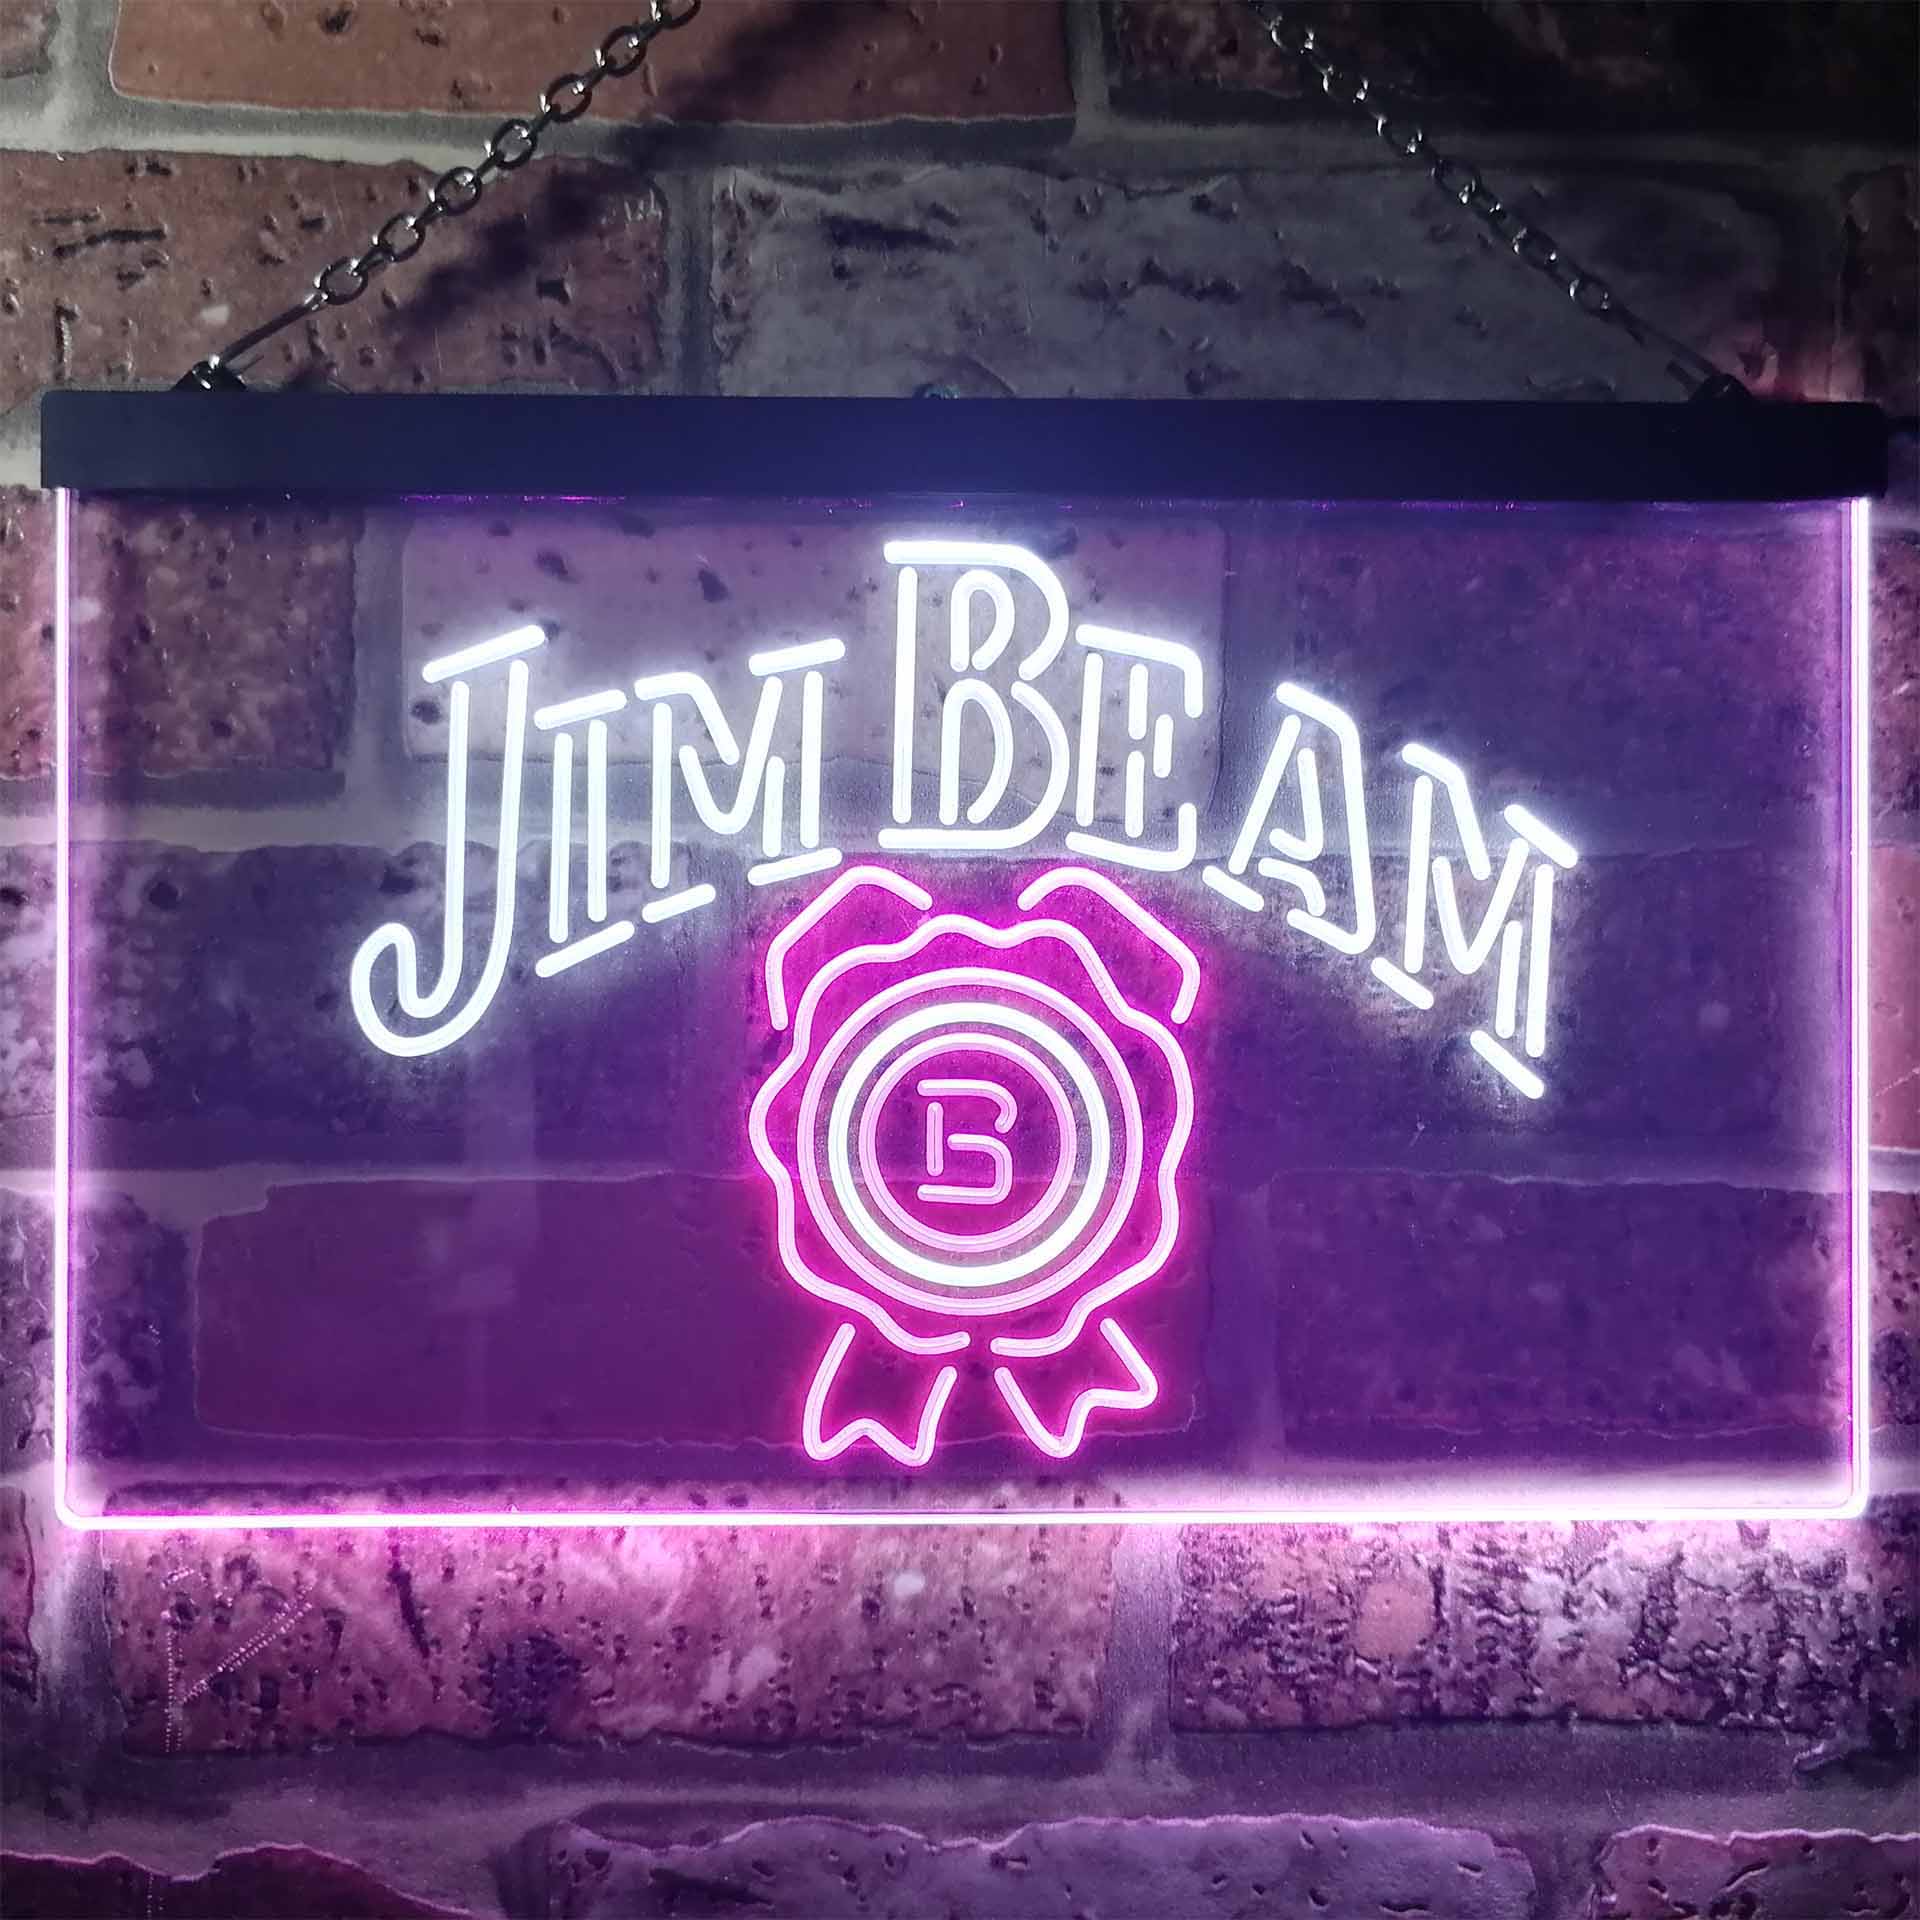 Jim Beam Beer Pub Neon LED Sign